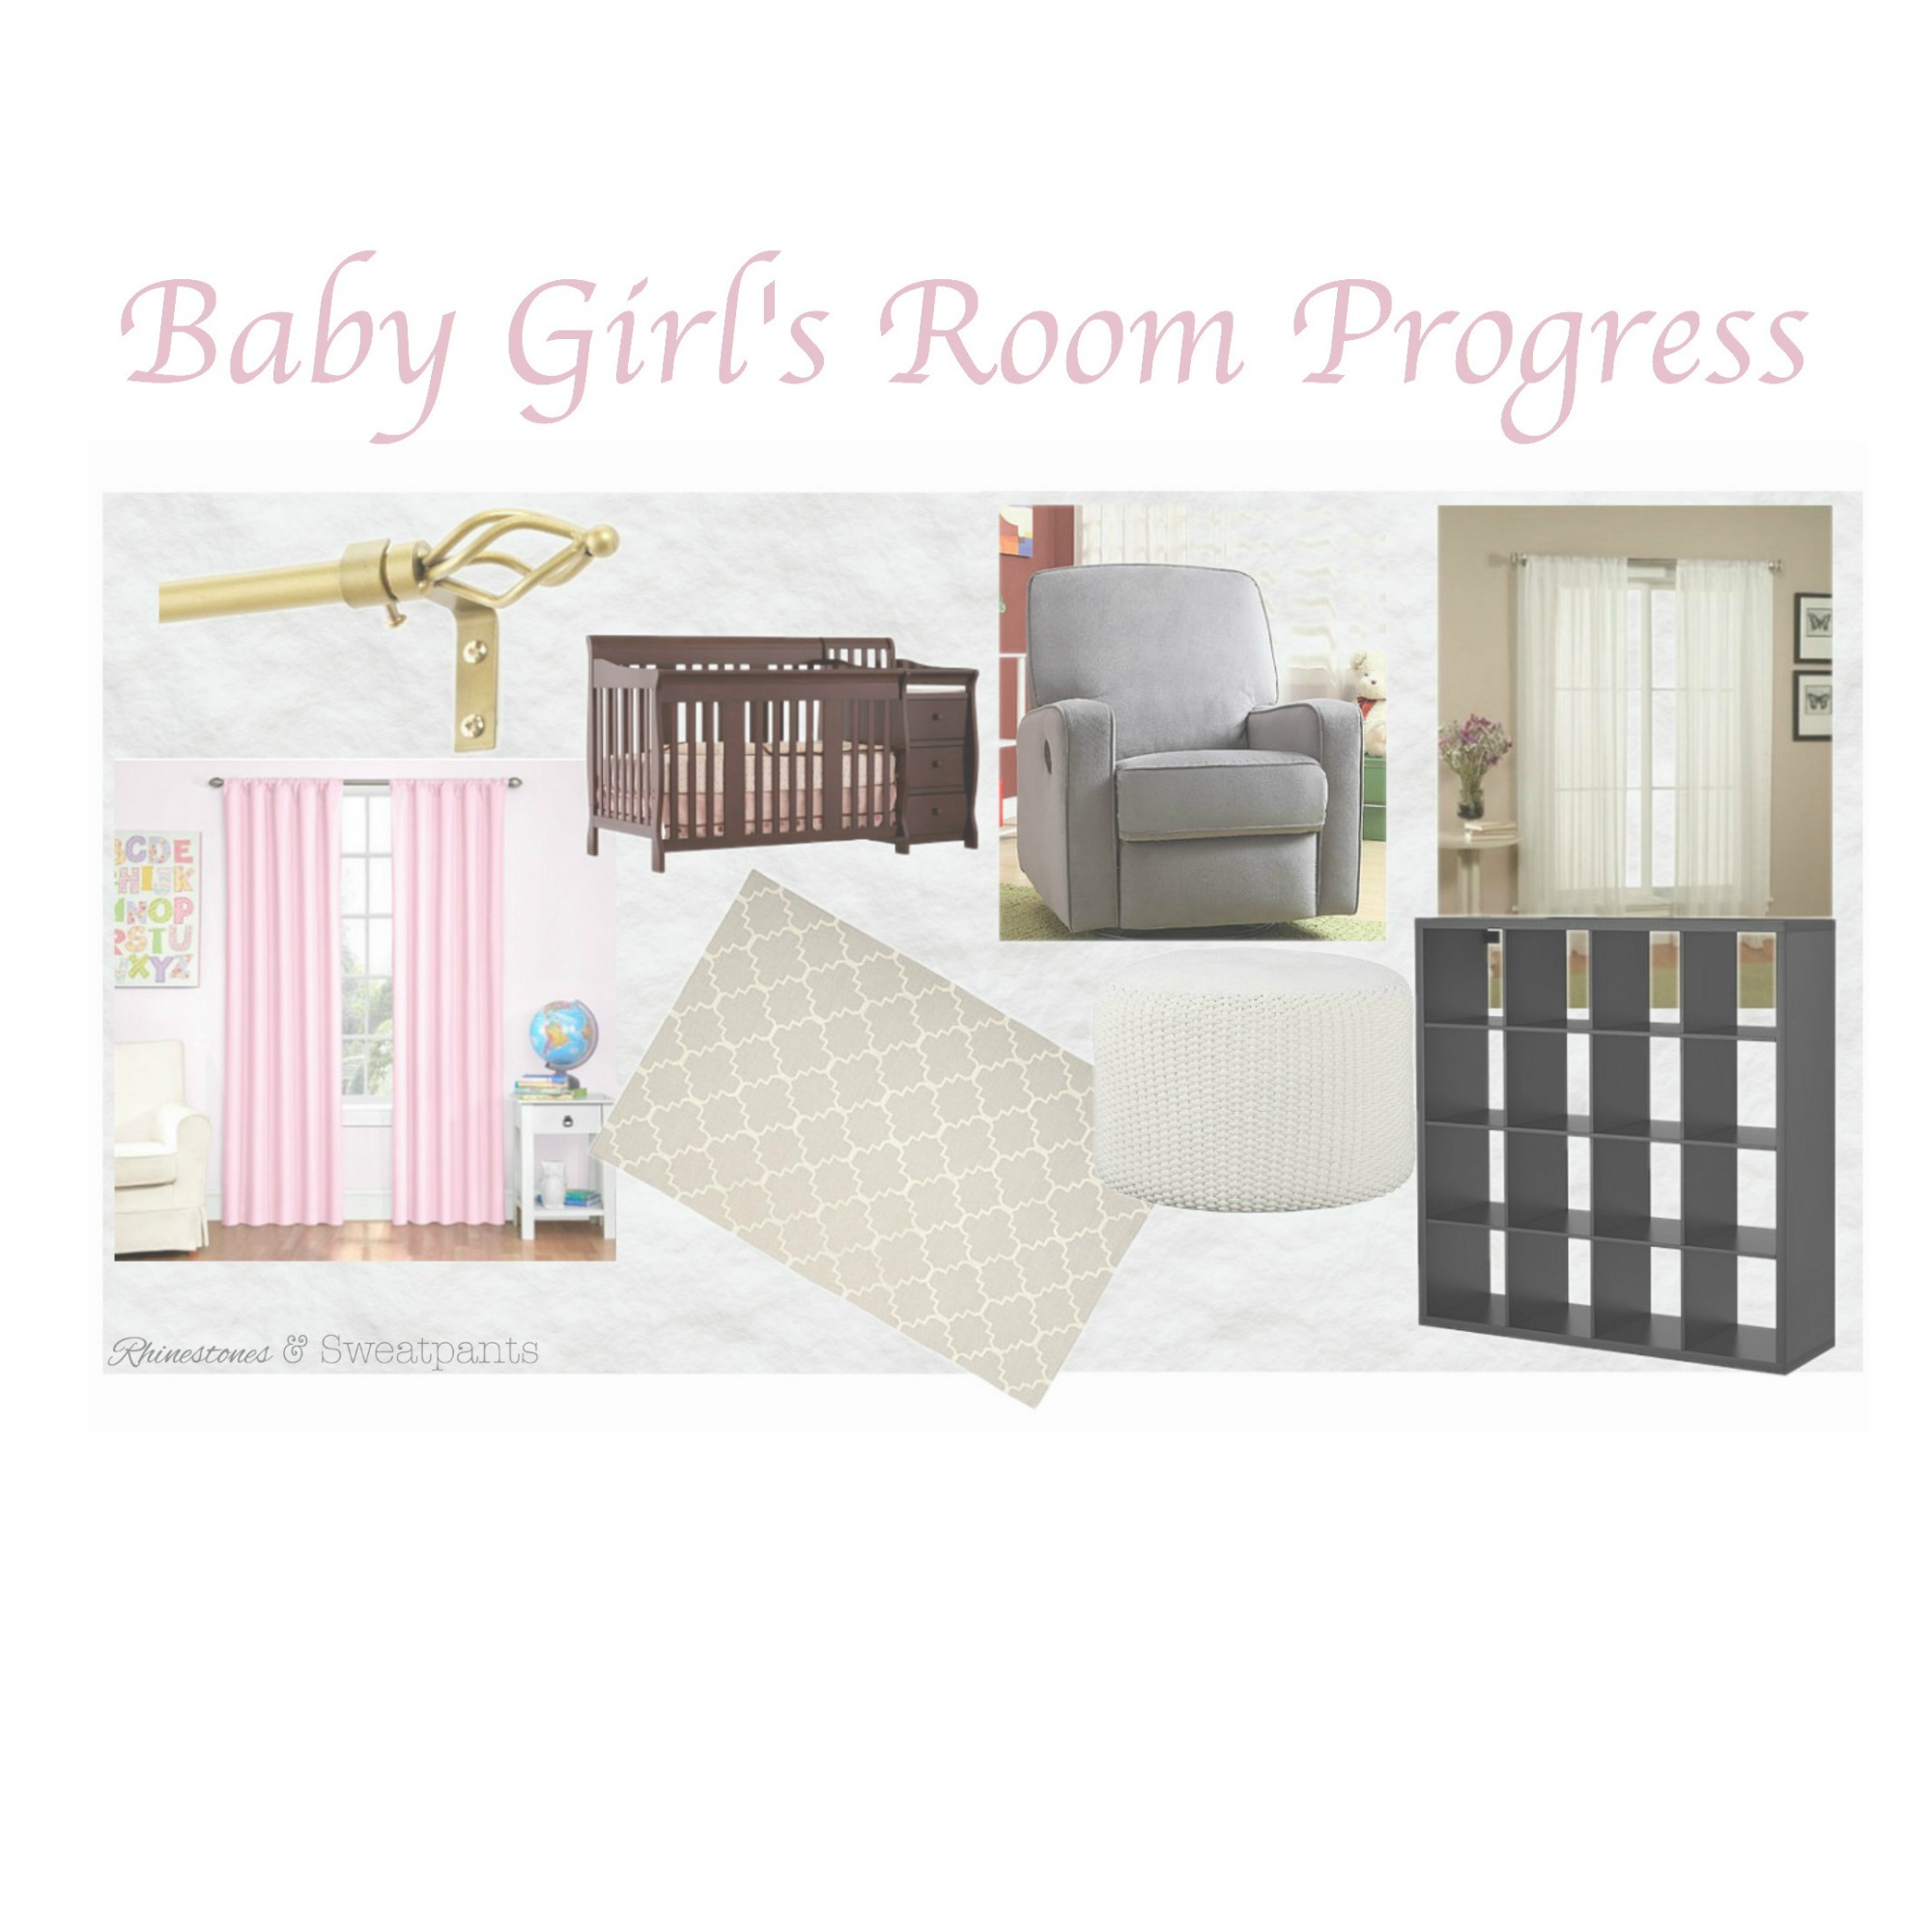 Baby Girl’s Room Progress